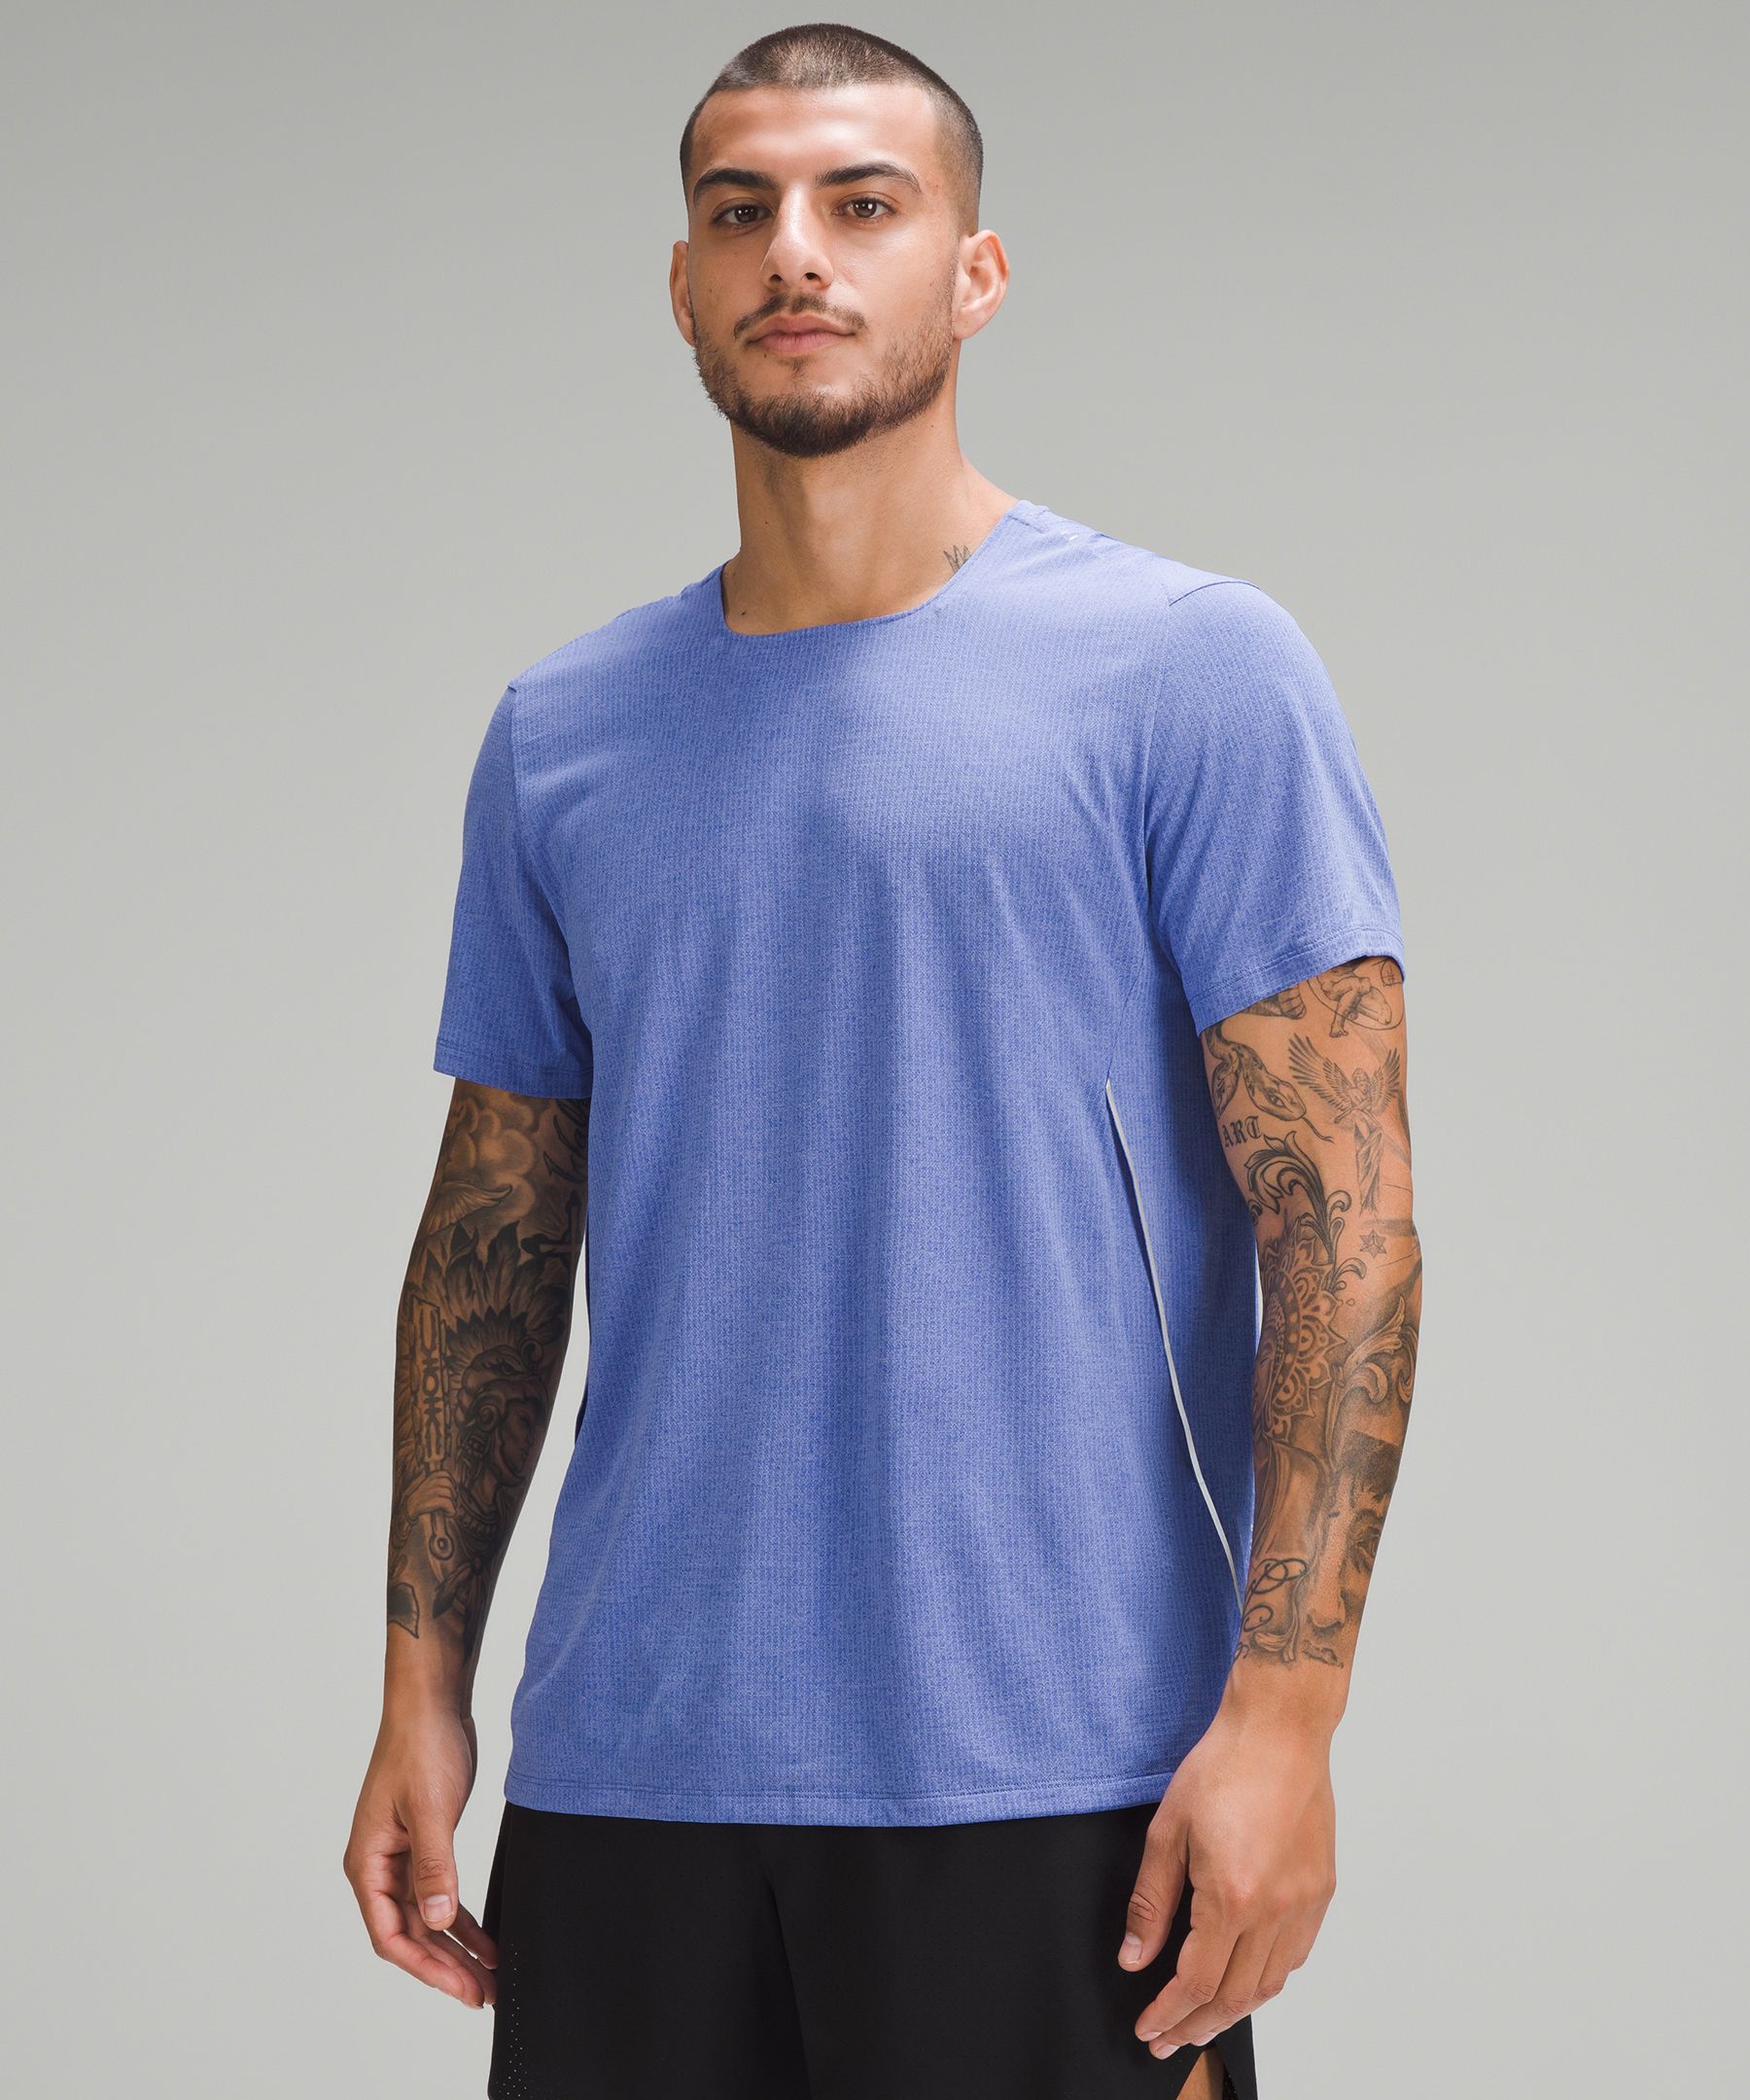 Fast and Free Short-Sleeve Shirt *Airflow | Men's Short Sleeve Shirts ...